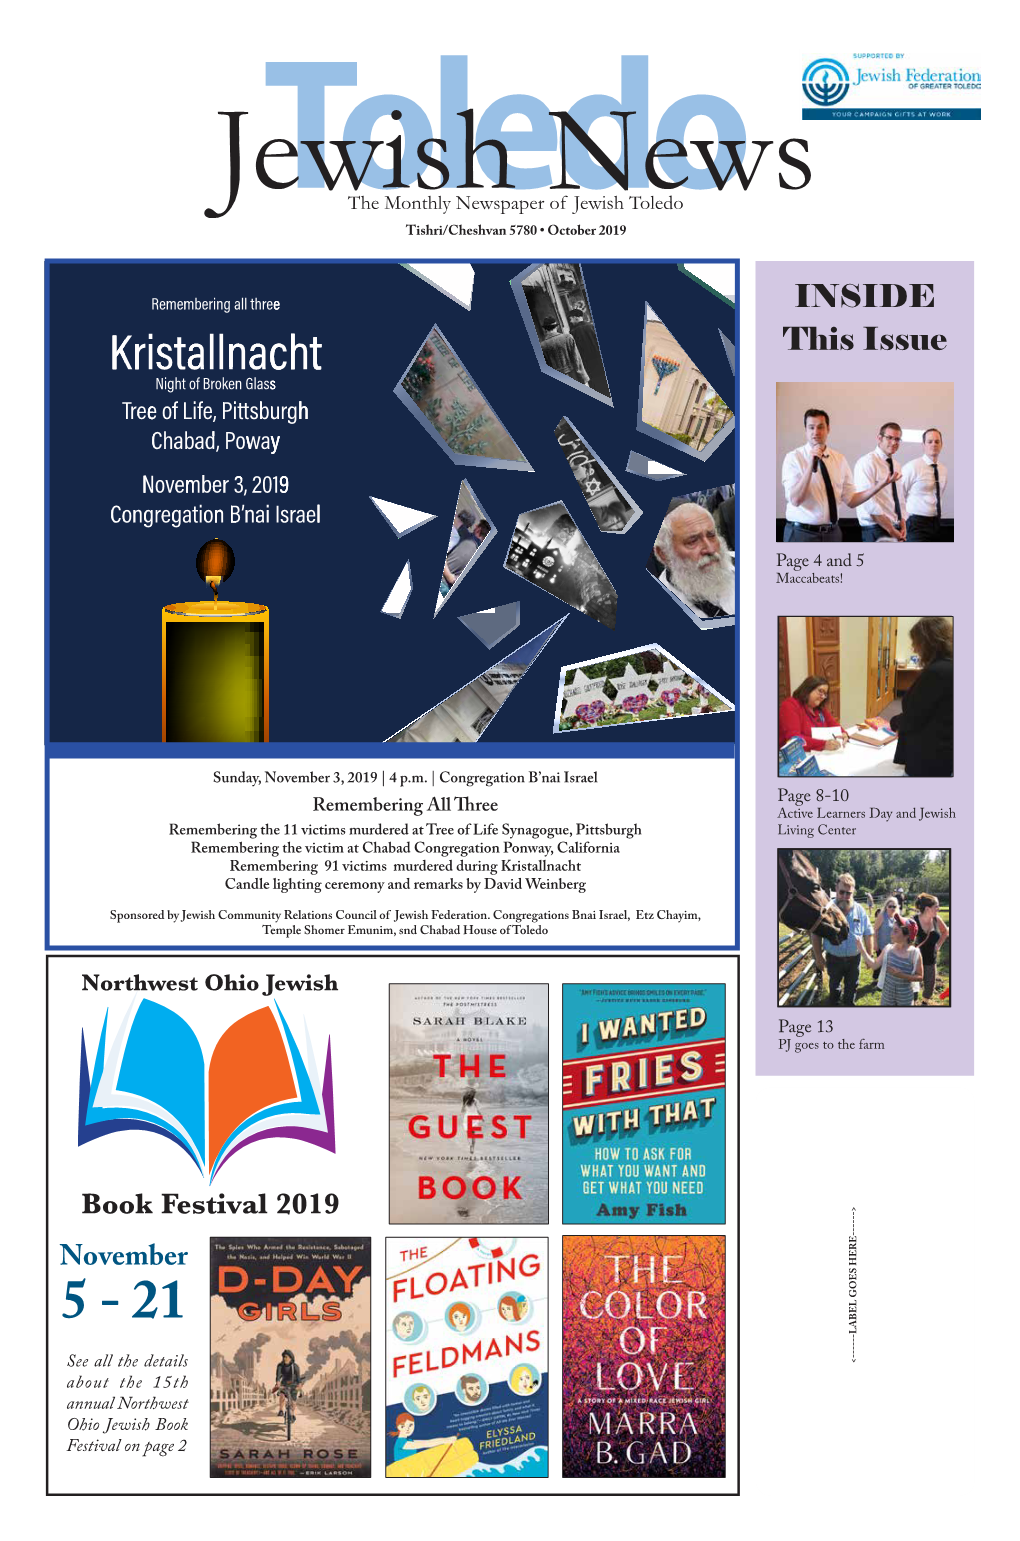 Kristallnacht Sponsored by Jewish Community Relations Council of Jewish Federation